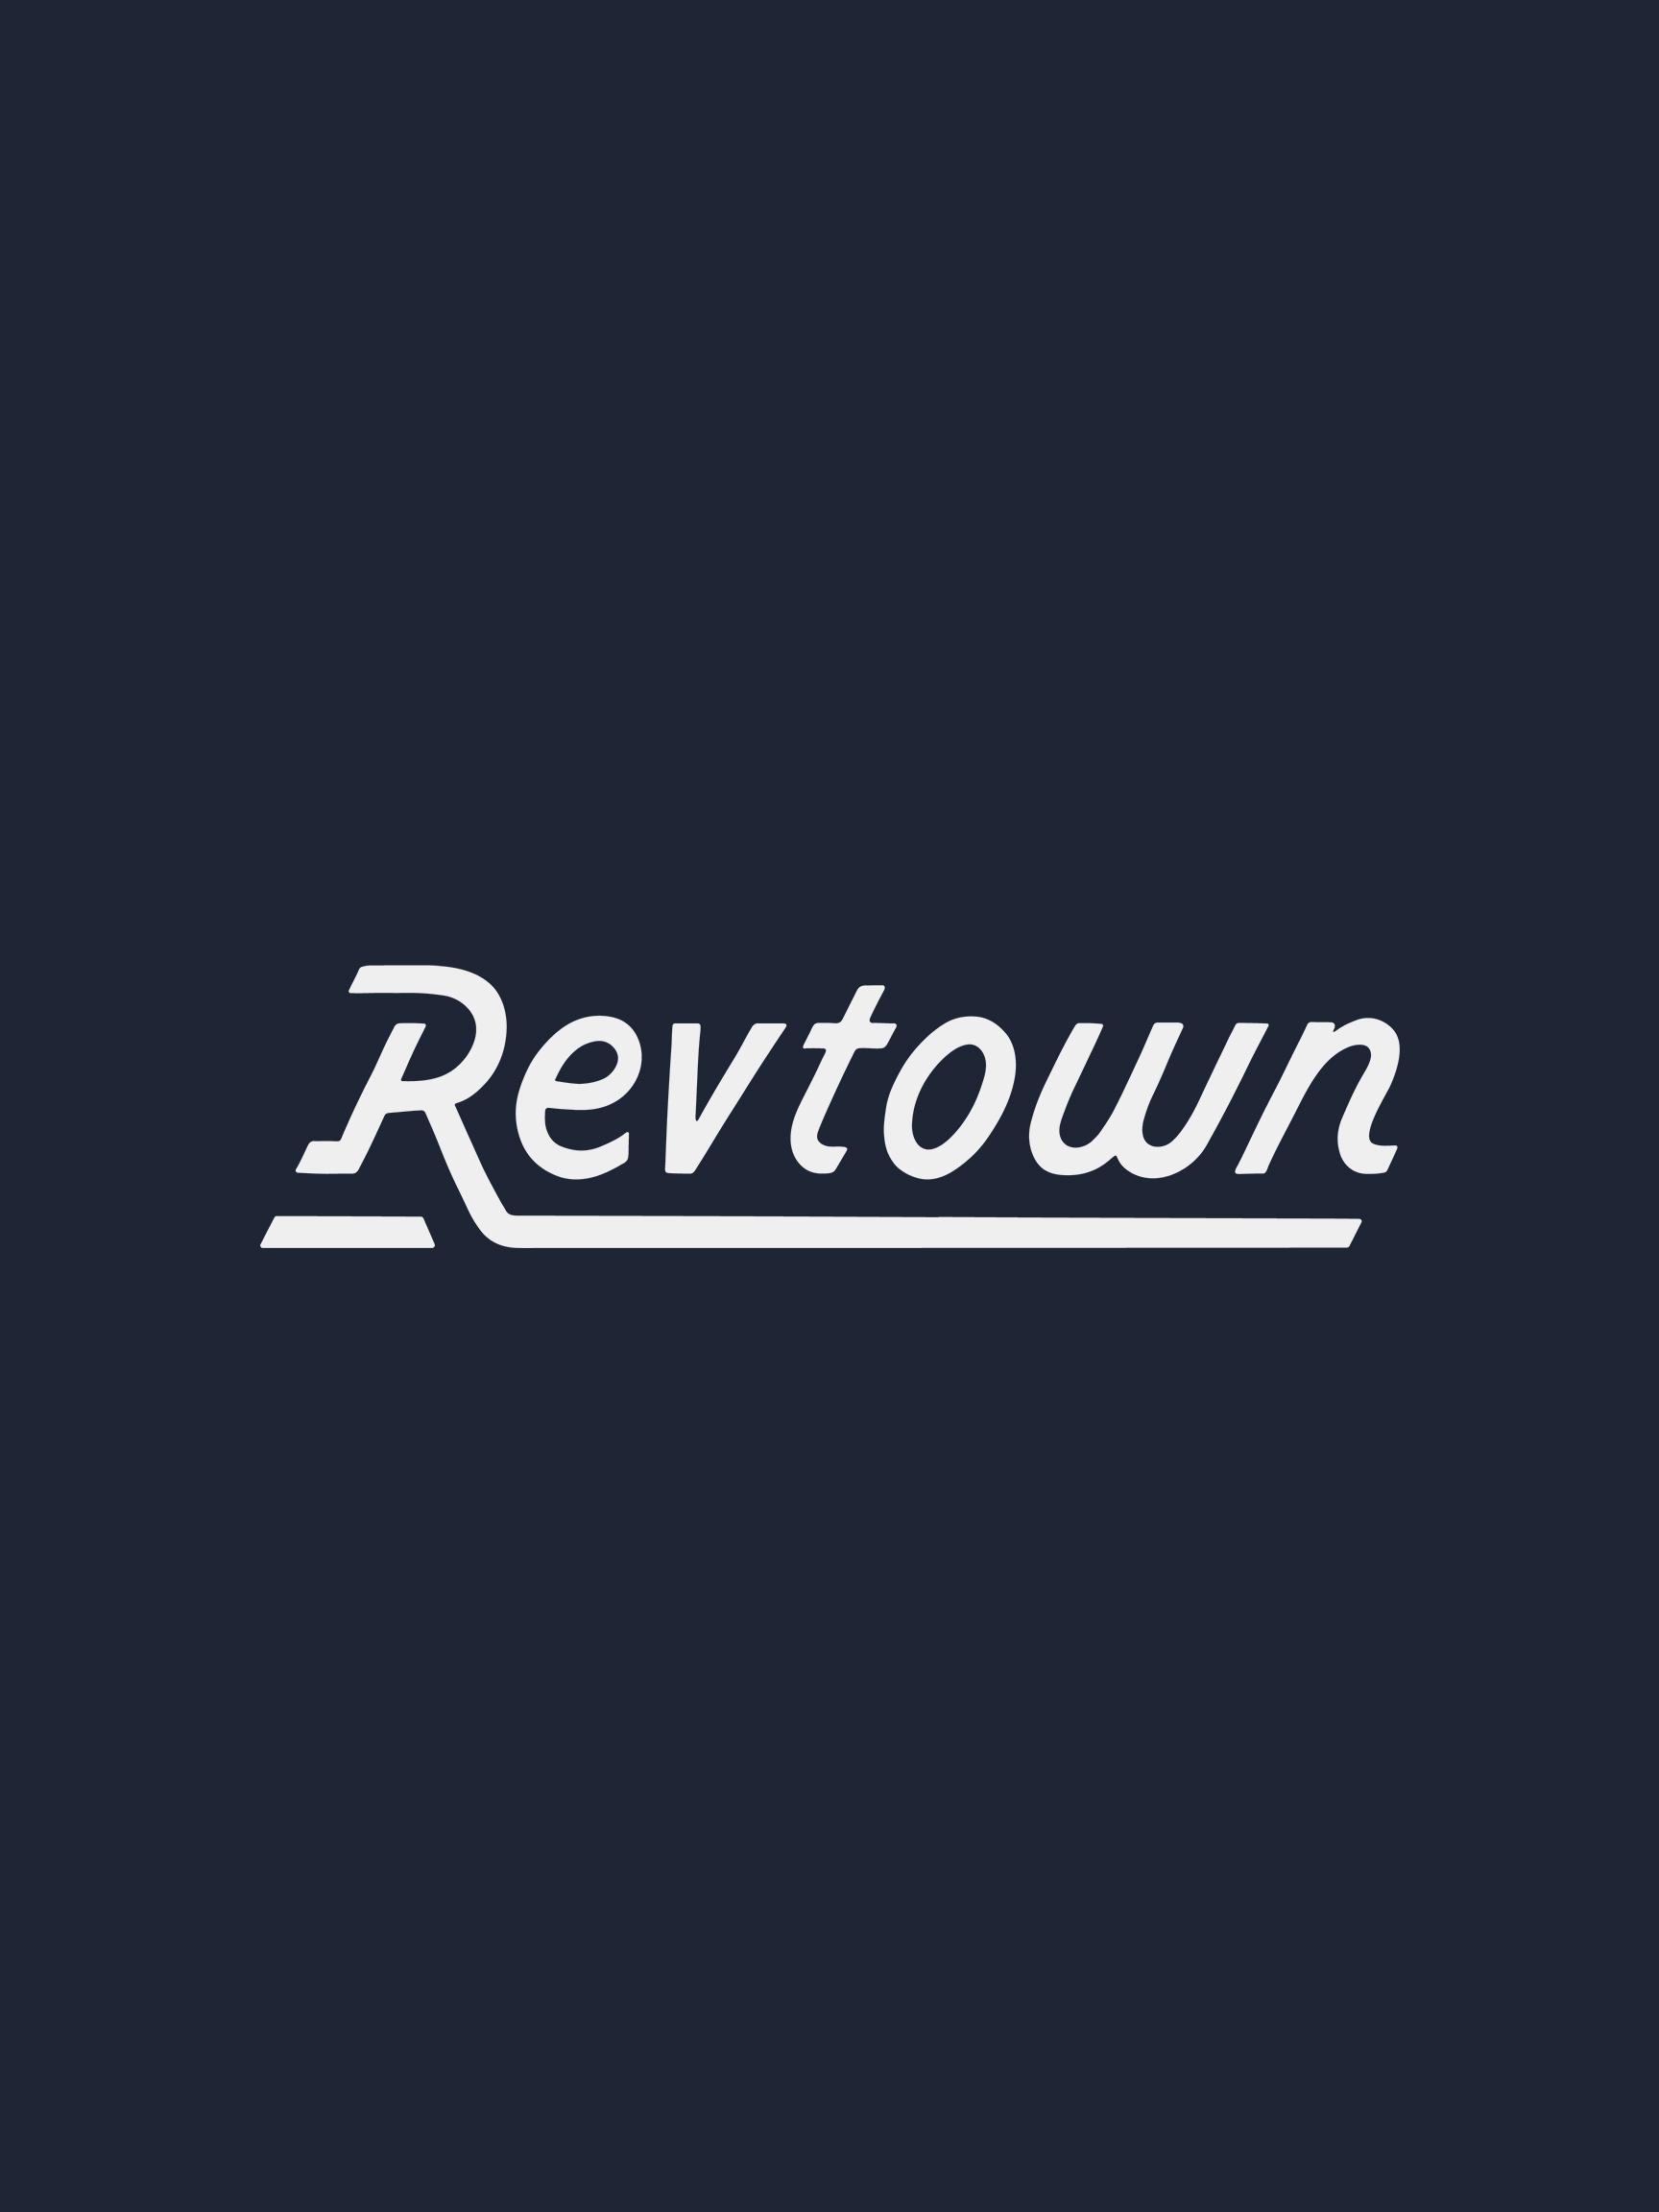 revtown logo 2x